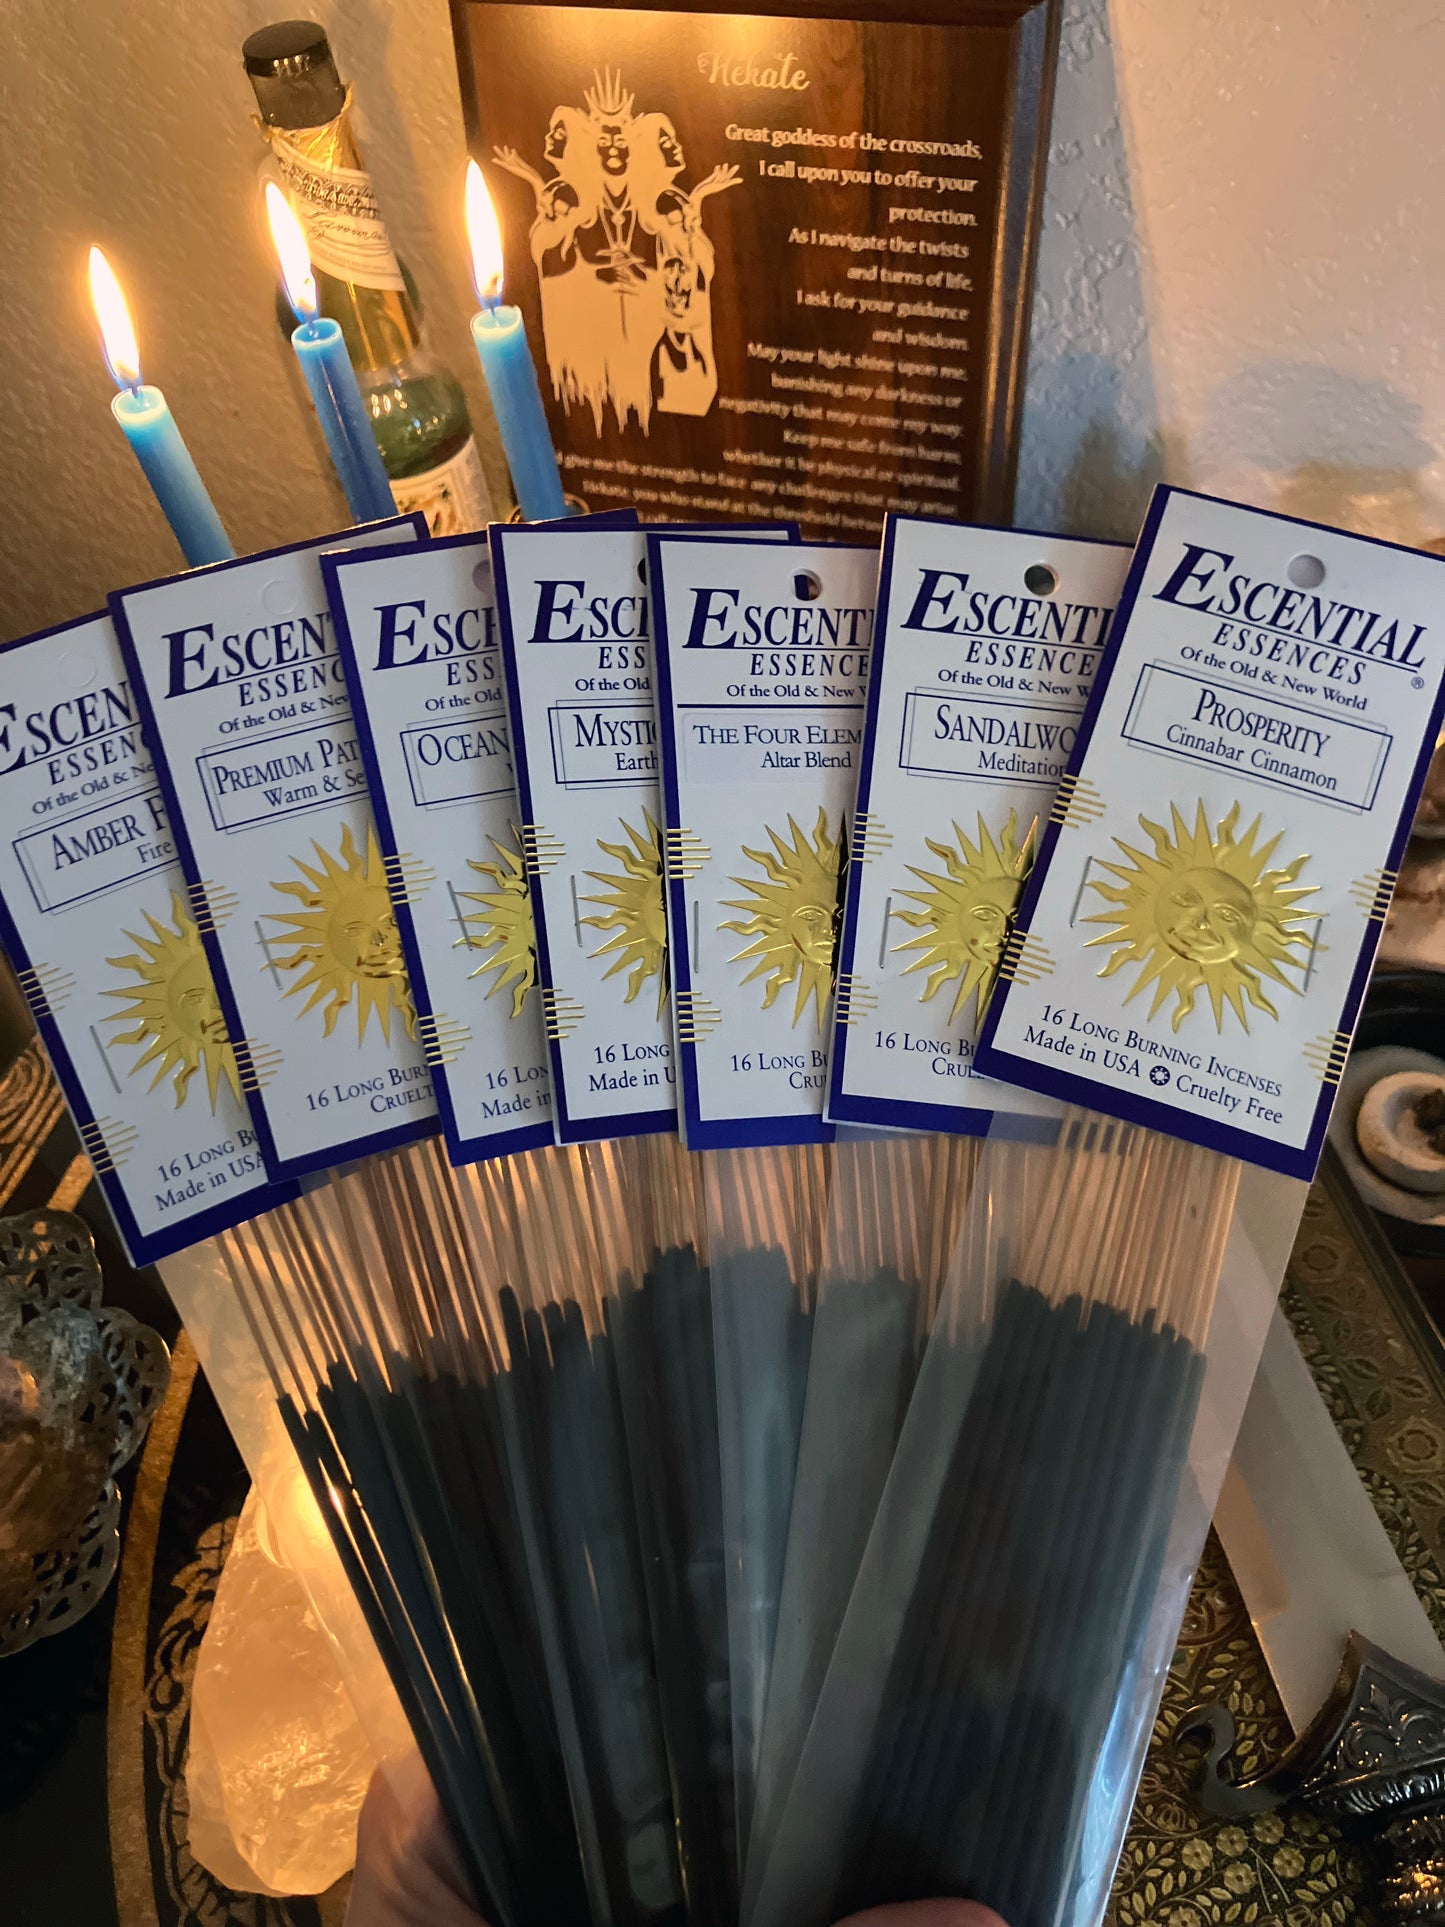 Winter Solstice escential essences incense sticks 16 pack